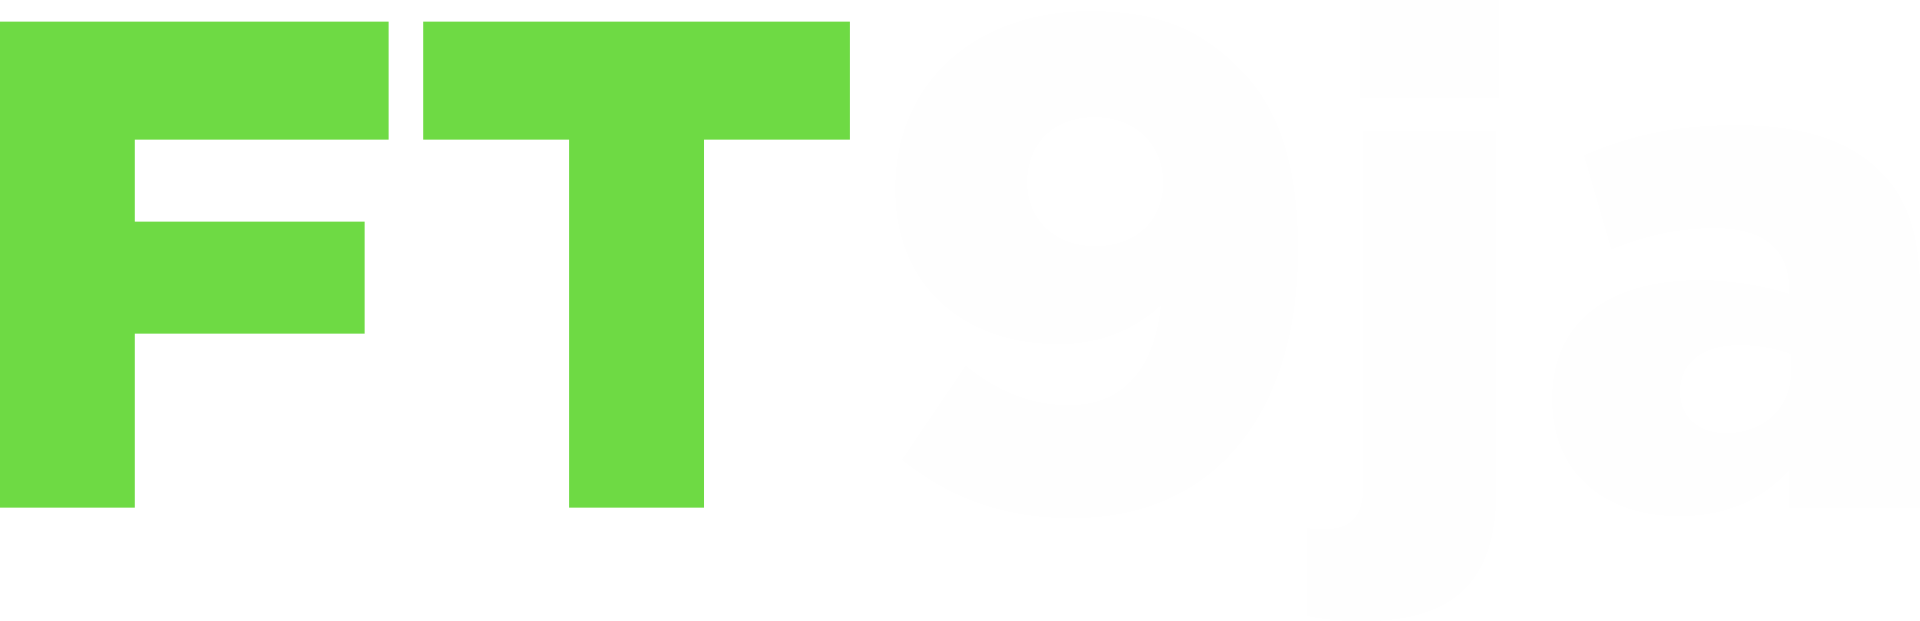 FT9ja Logo